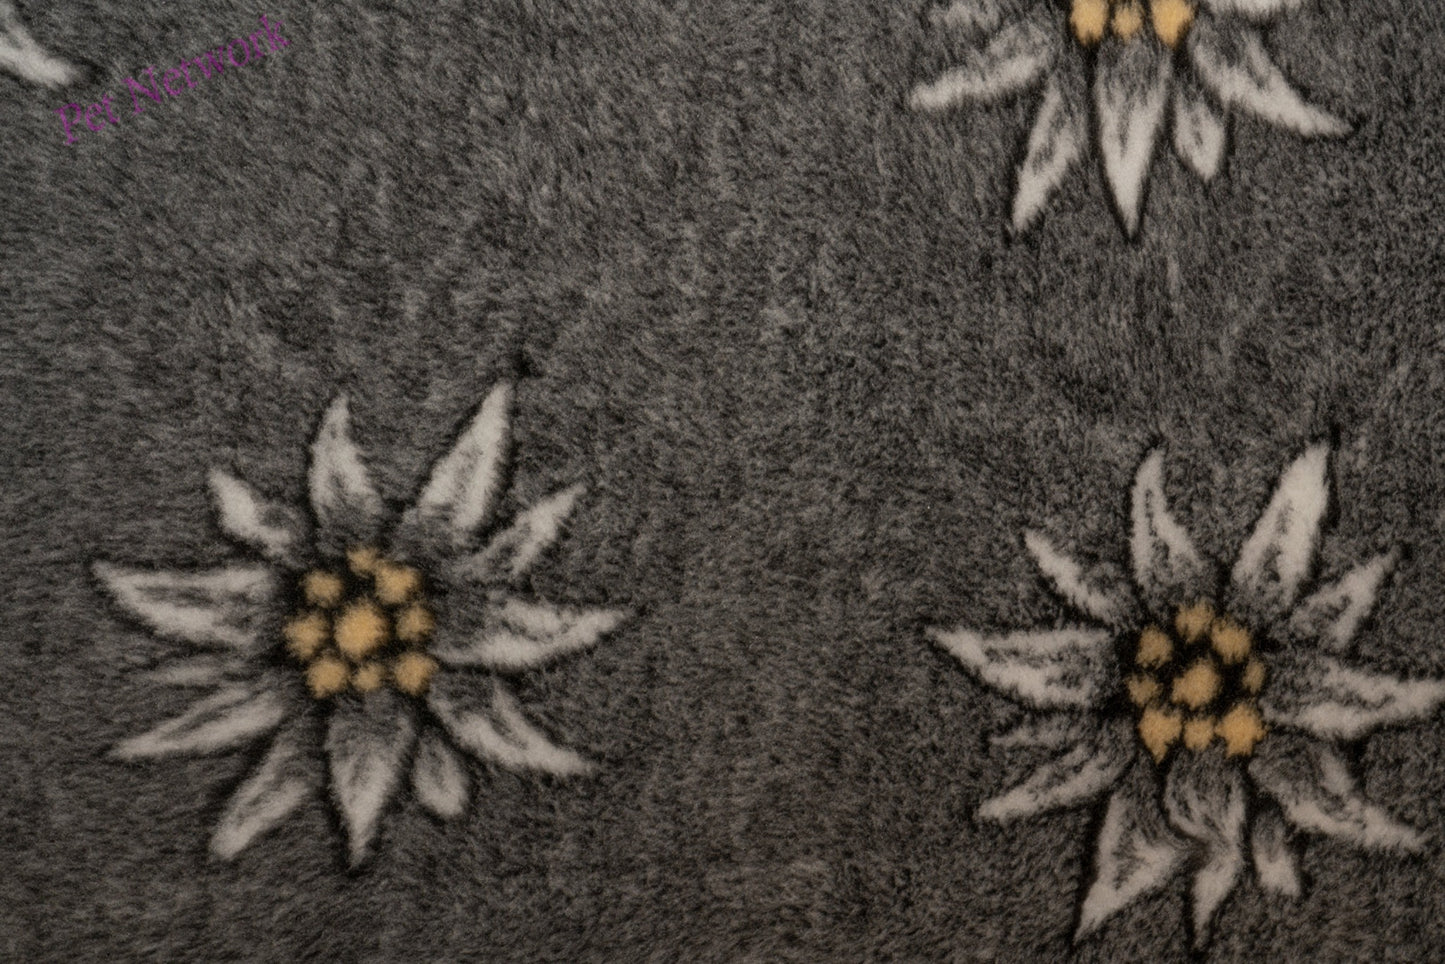 Vet Bed - Rubber Backed - Edelweiss Flower Design (Charcoal)